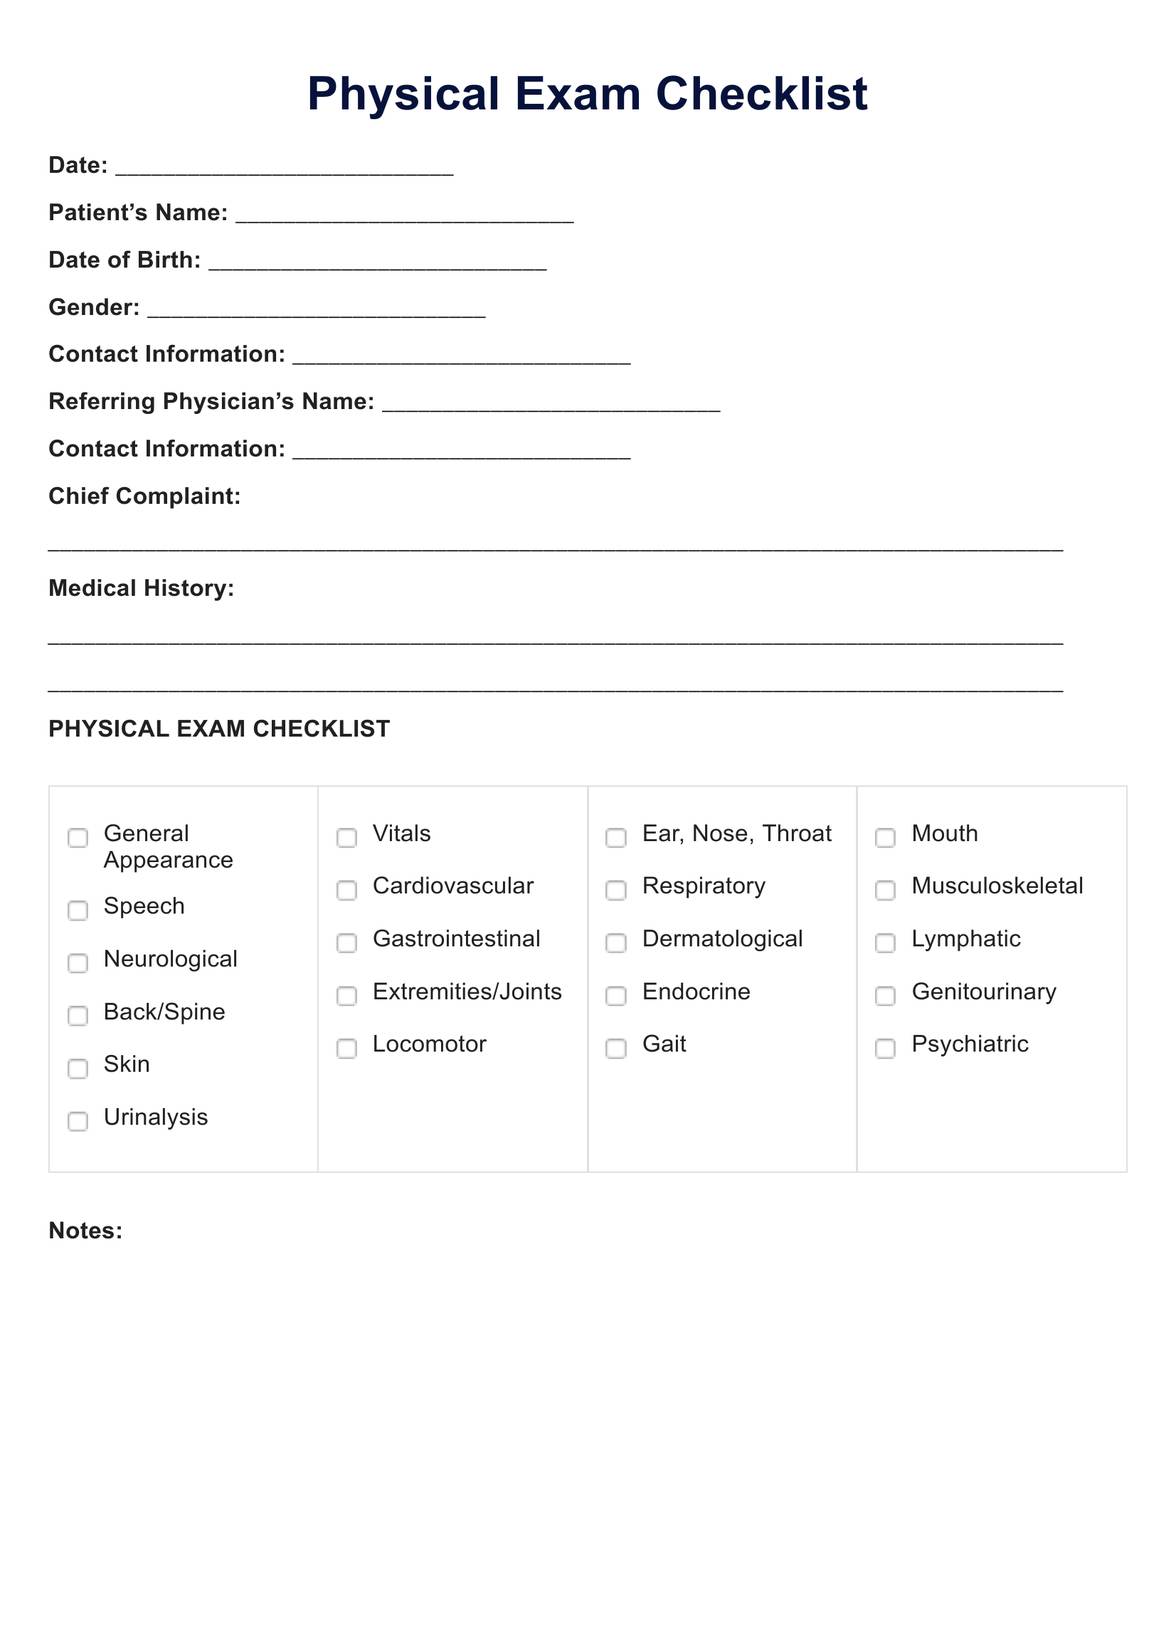 Physical Exam Checklist PDF Example